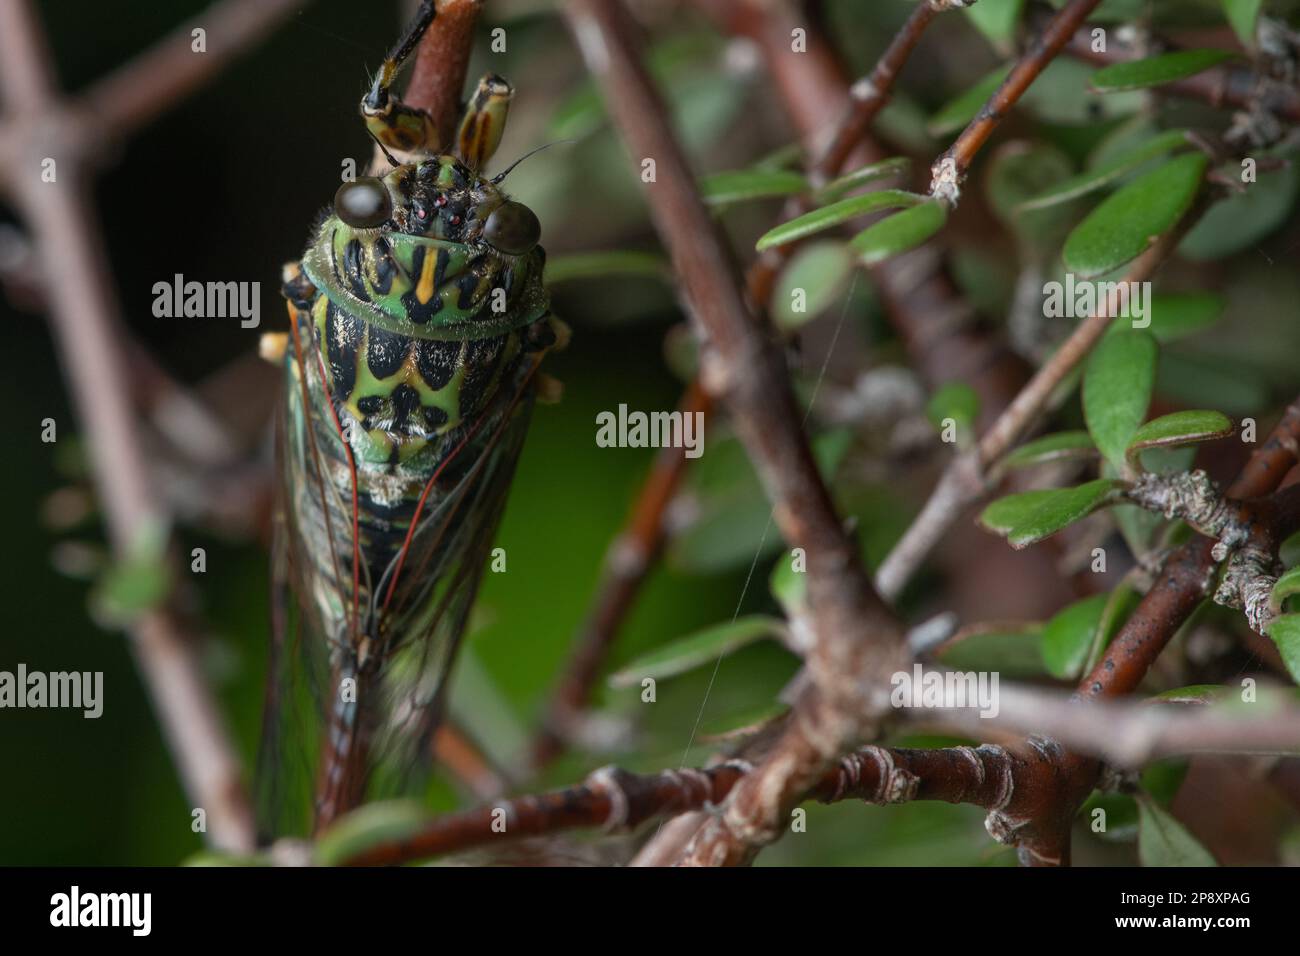 An adult chorus cicada, Amphipsalta zelandica, perched on a coprosma bush in the canterbury region of Aotearoa New Zealand. Stock Photo